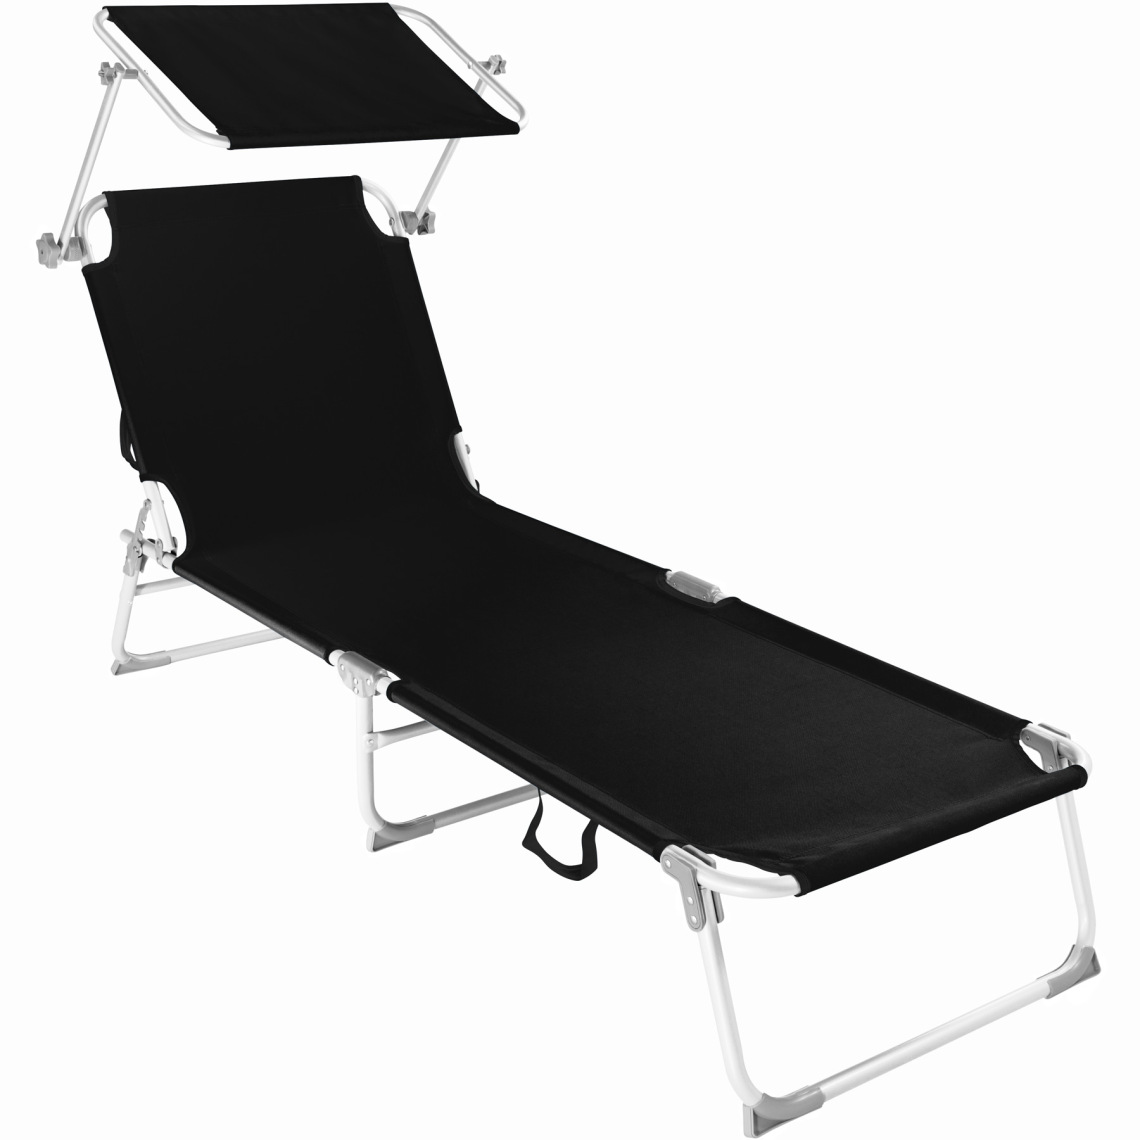 Tectake - Transat aluminium - noir - Transats, chaises longues